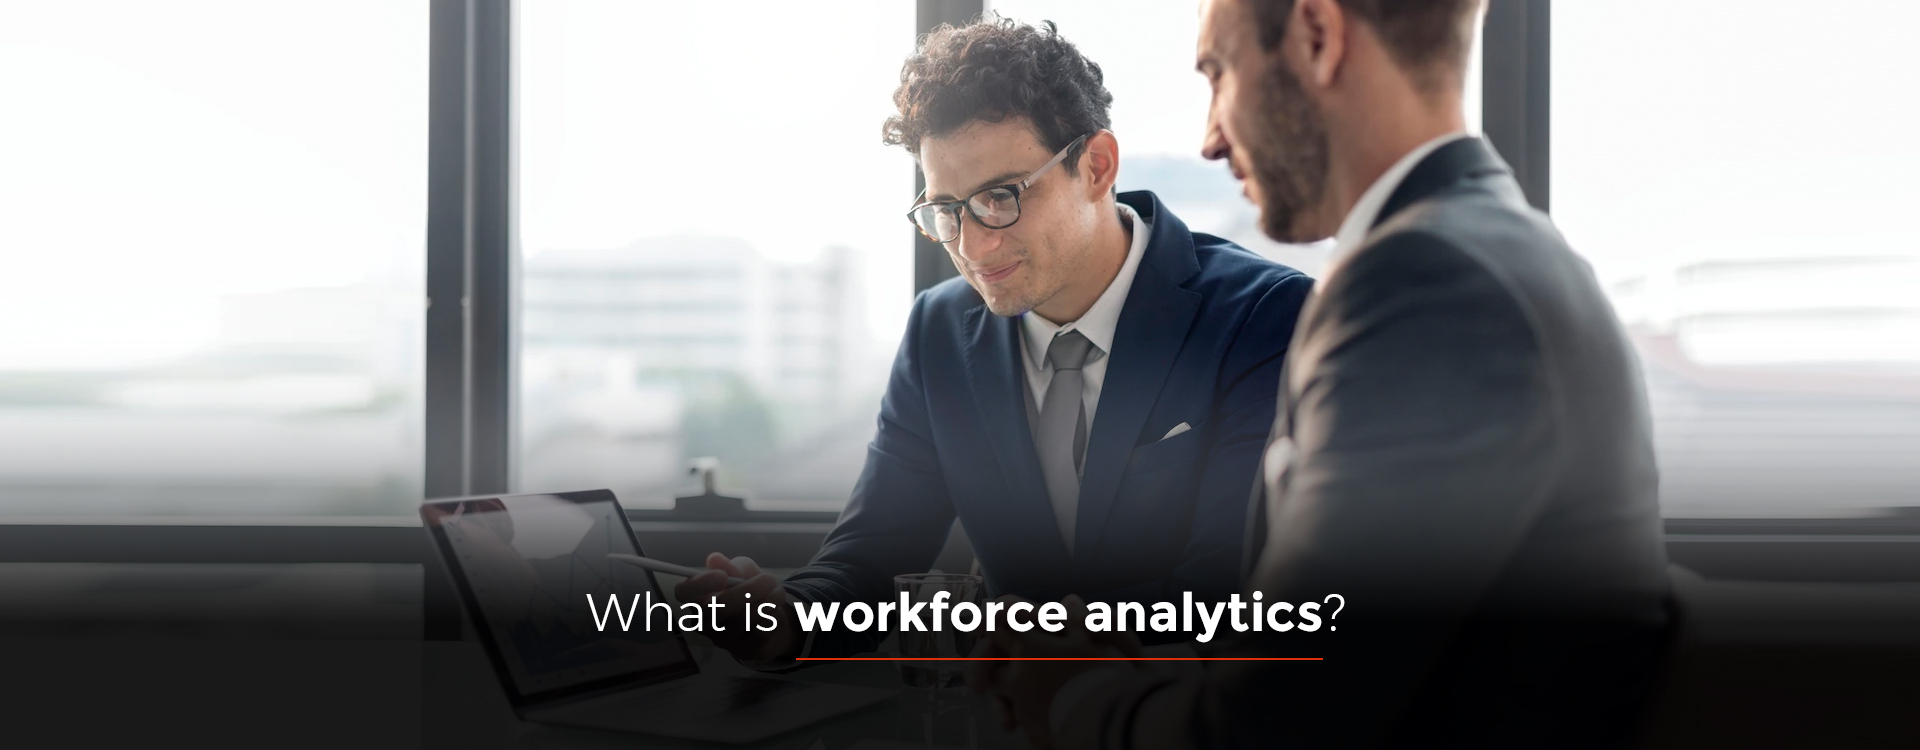 What is workforce analytics?